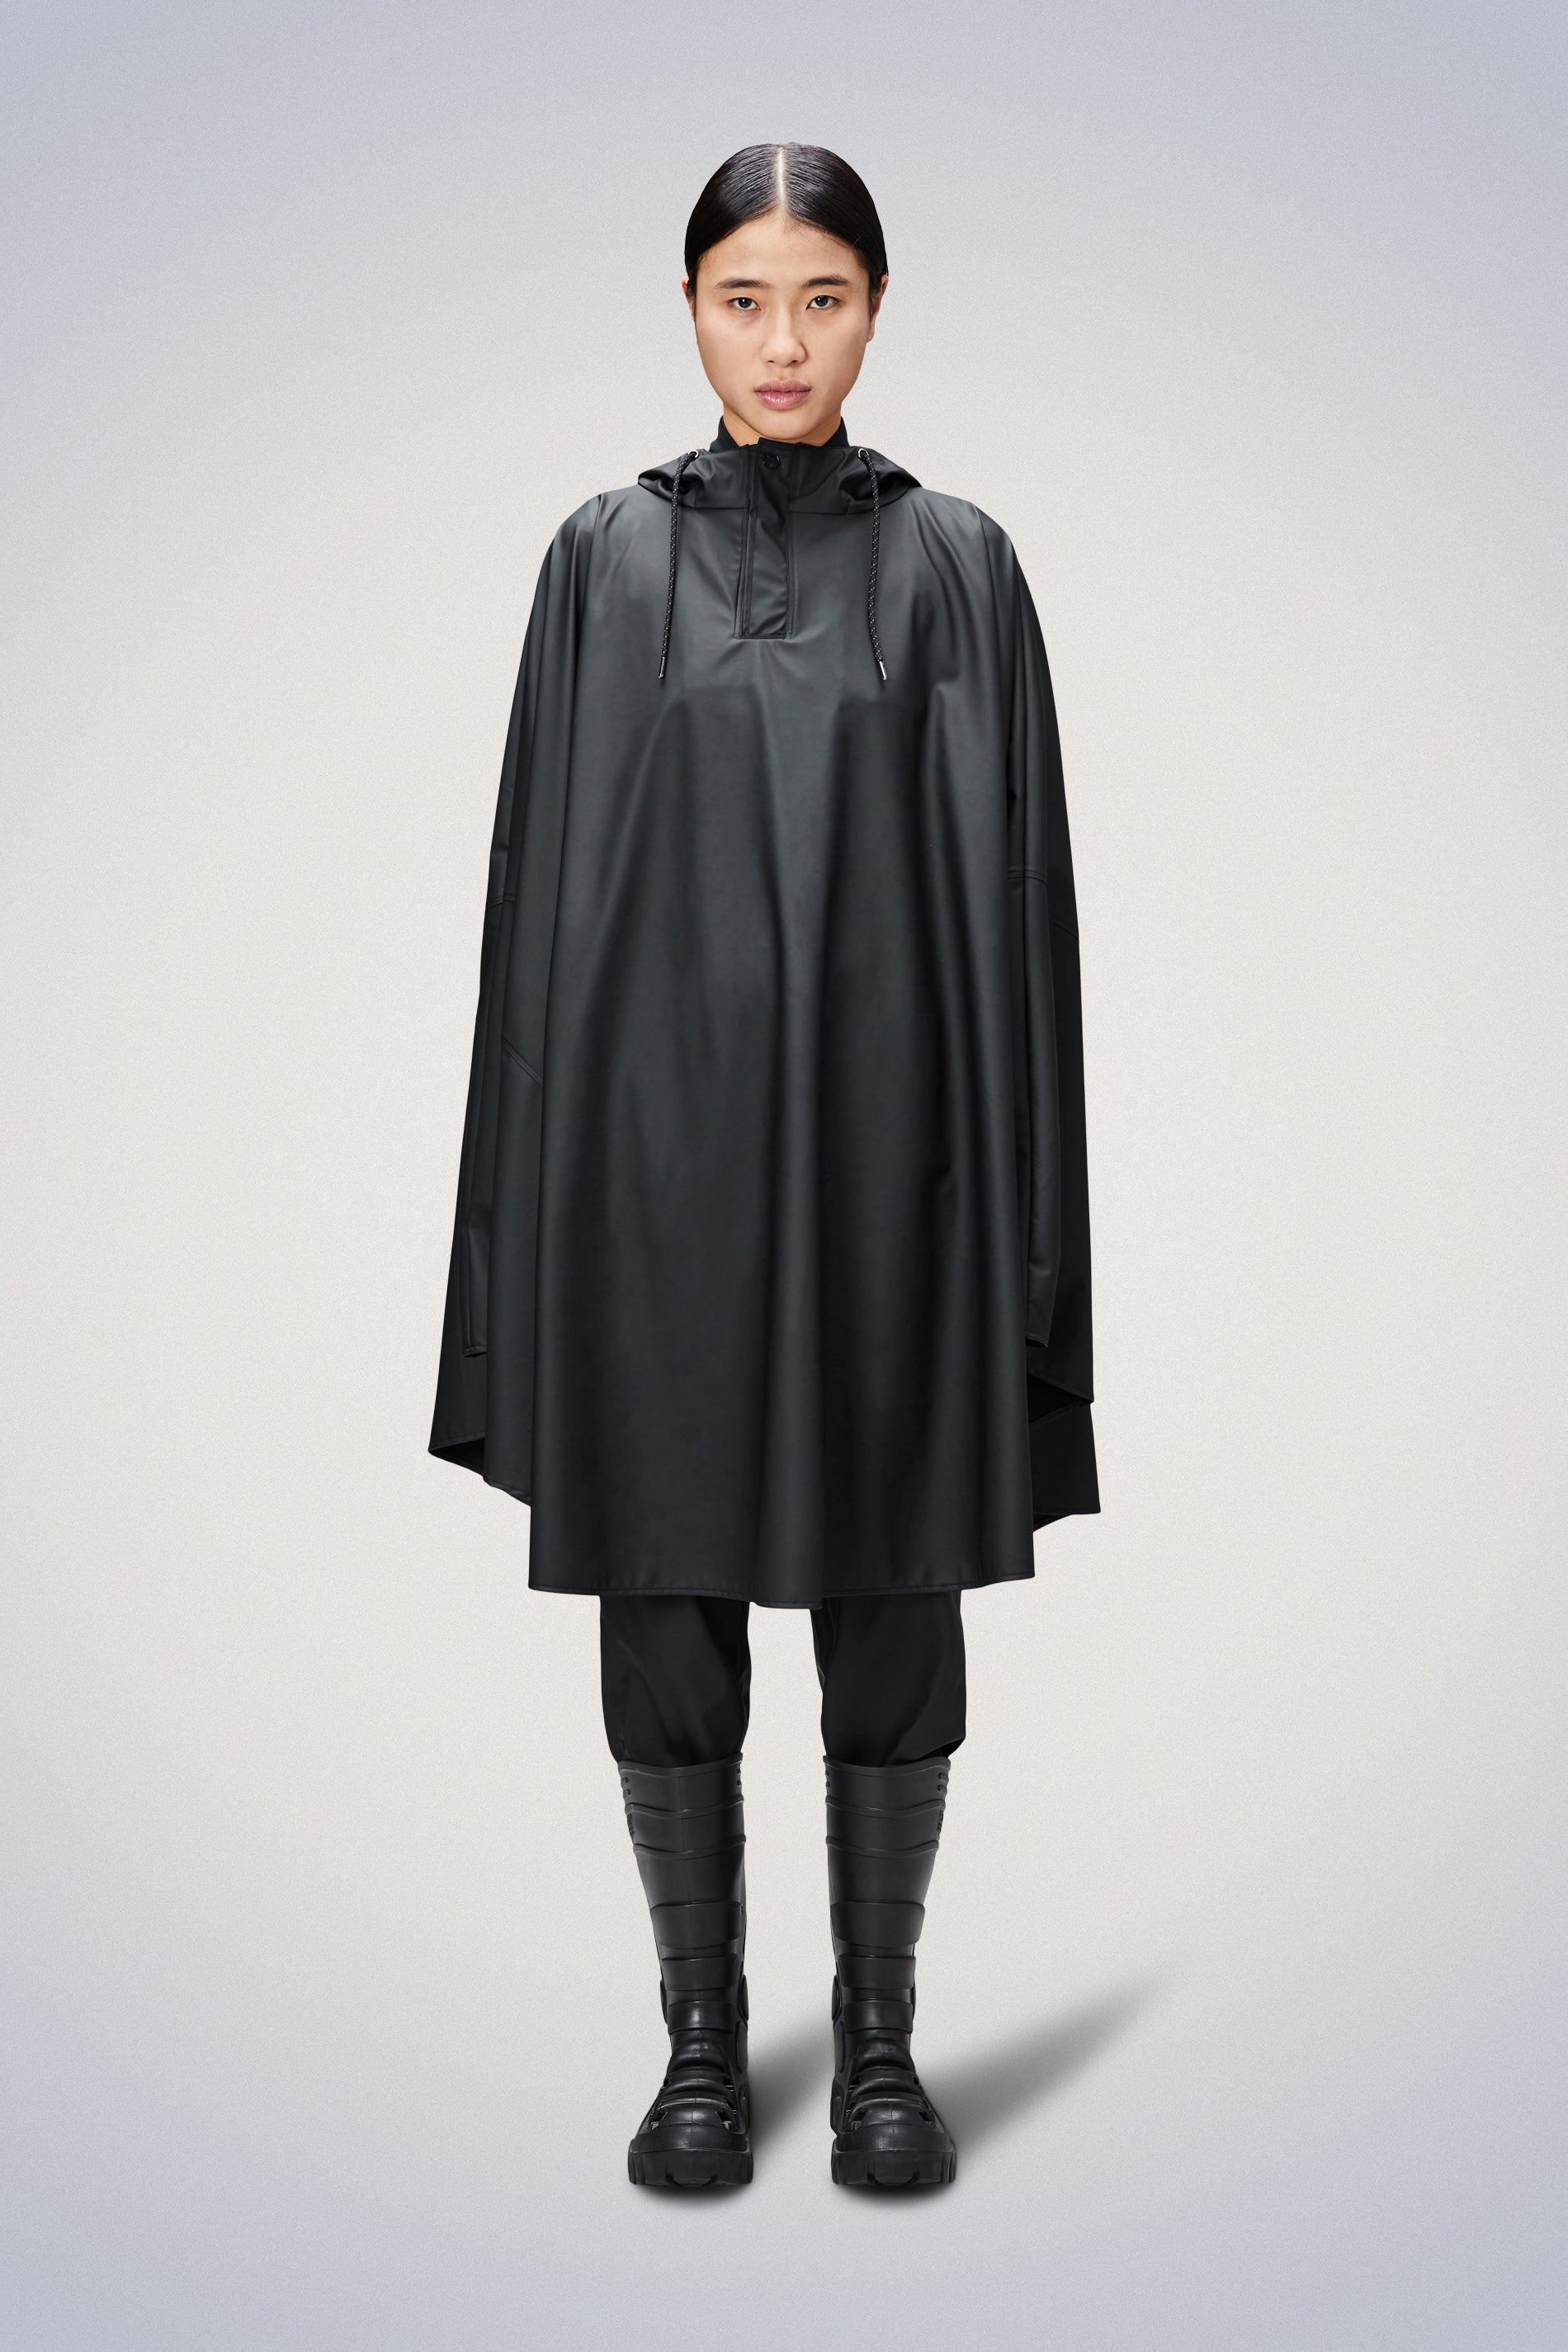 Long Raincoat for Women, Waterproof Hood, Ladies Rain Coat, Ponchos  Jackets, Windproof Female Chubasqueros Mujer